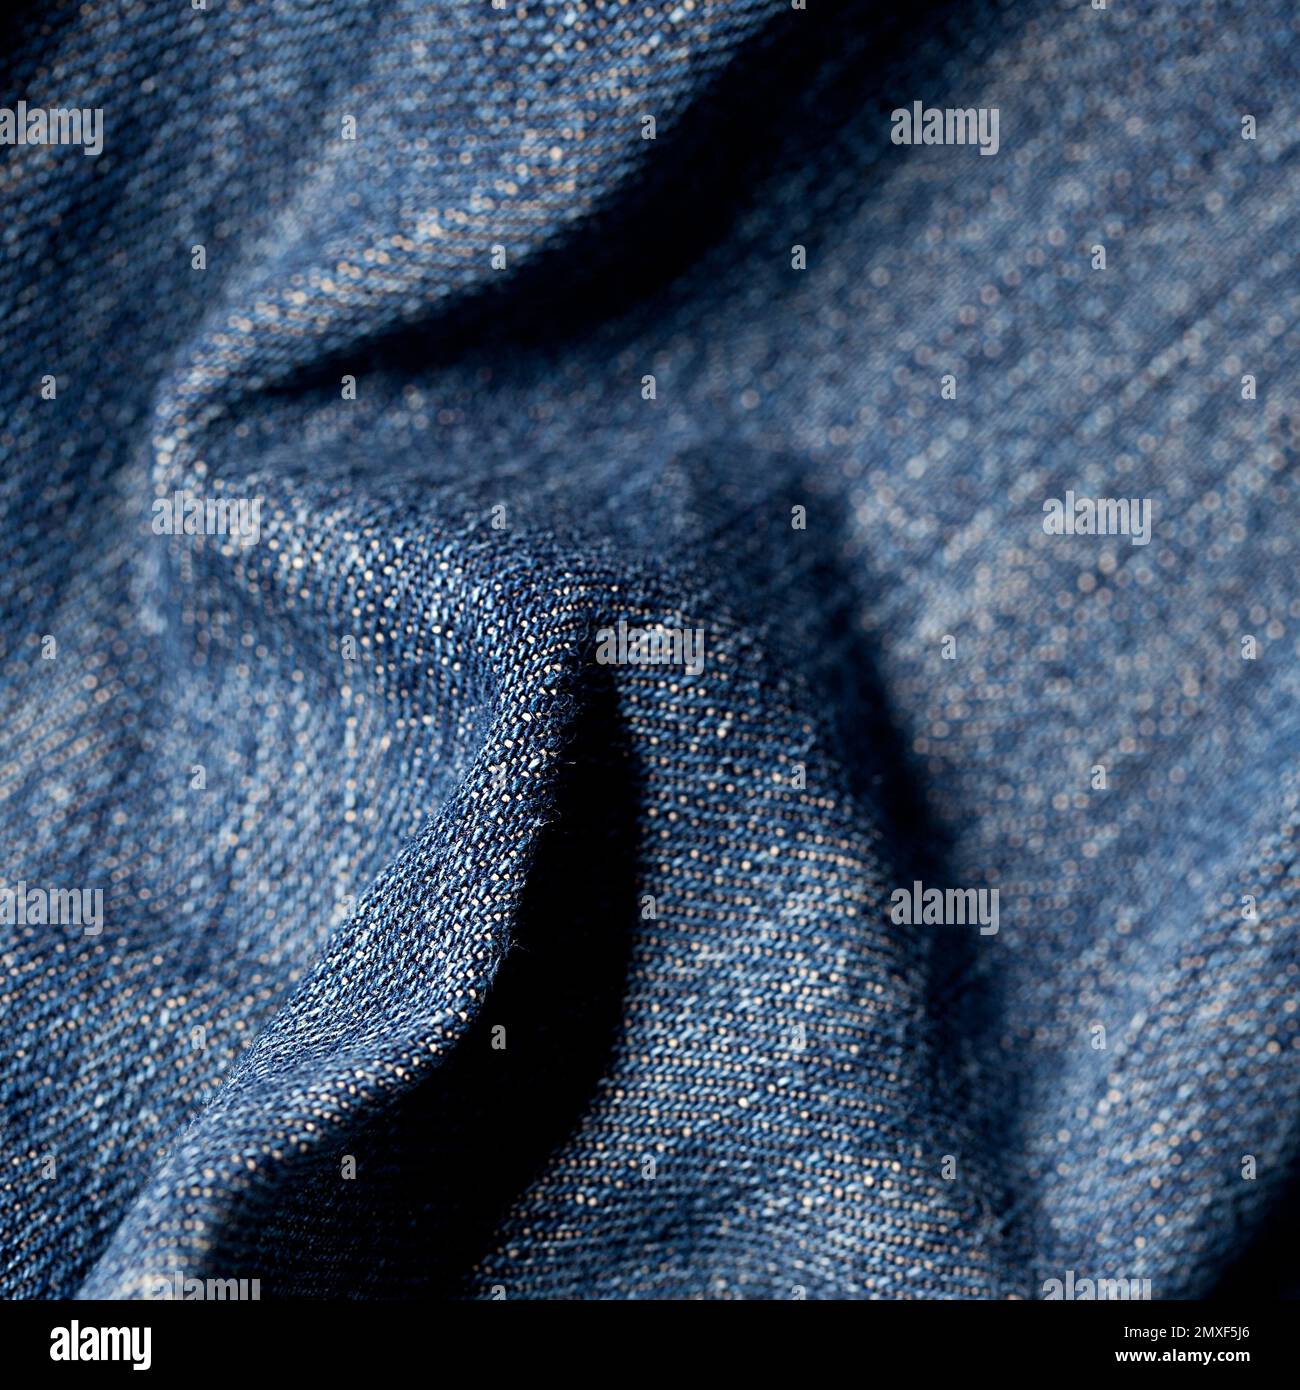 denim jeans cloth Stock Photo